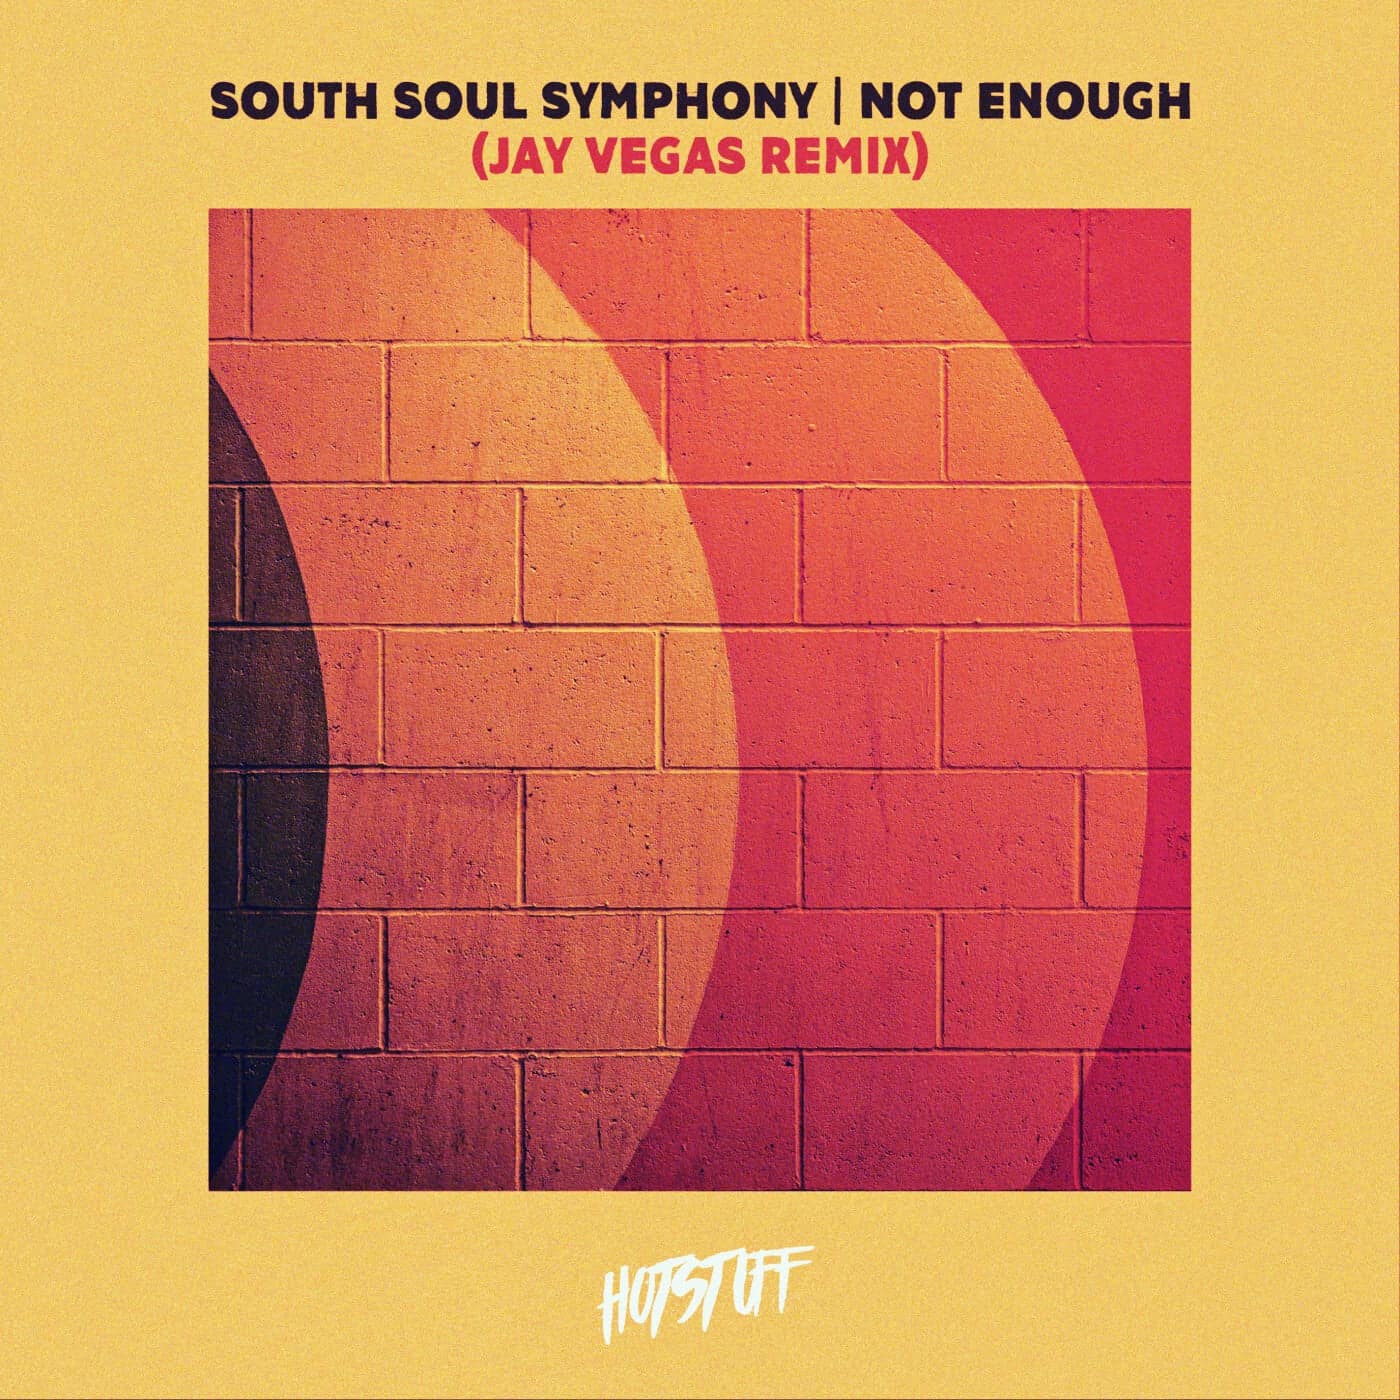 Download South Soul Symphony - Not Enough on Electrobuzz